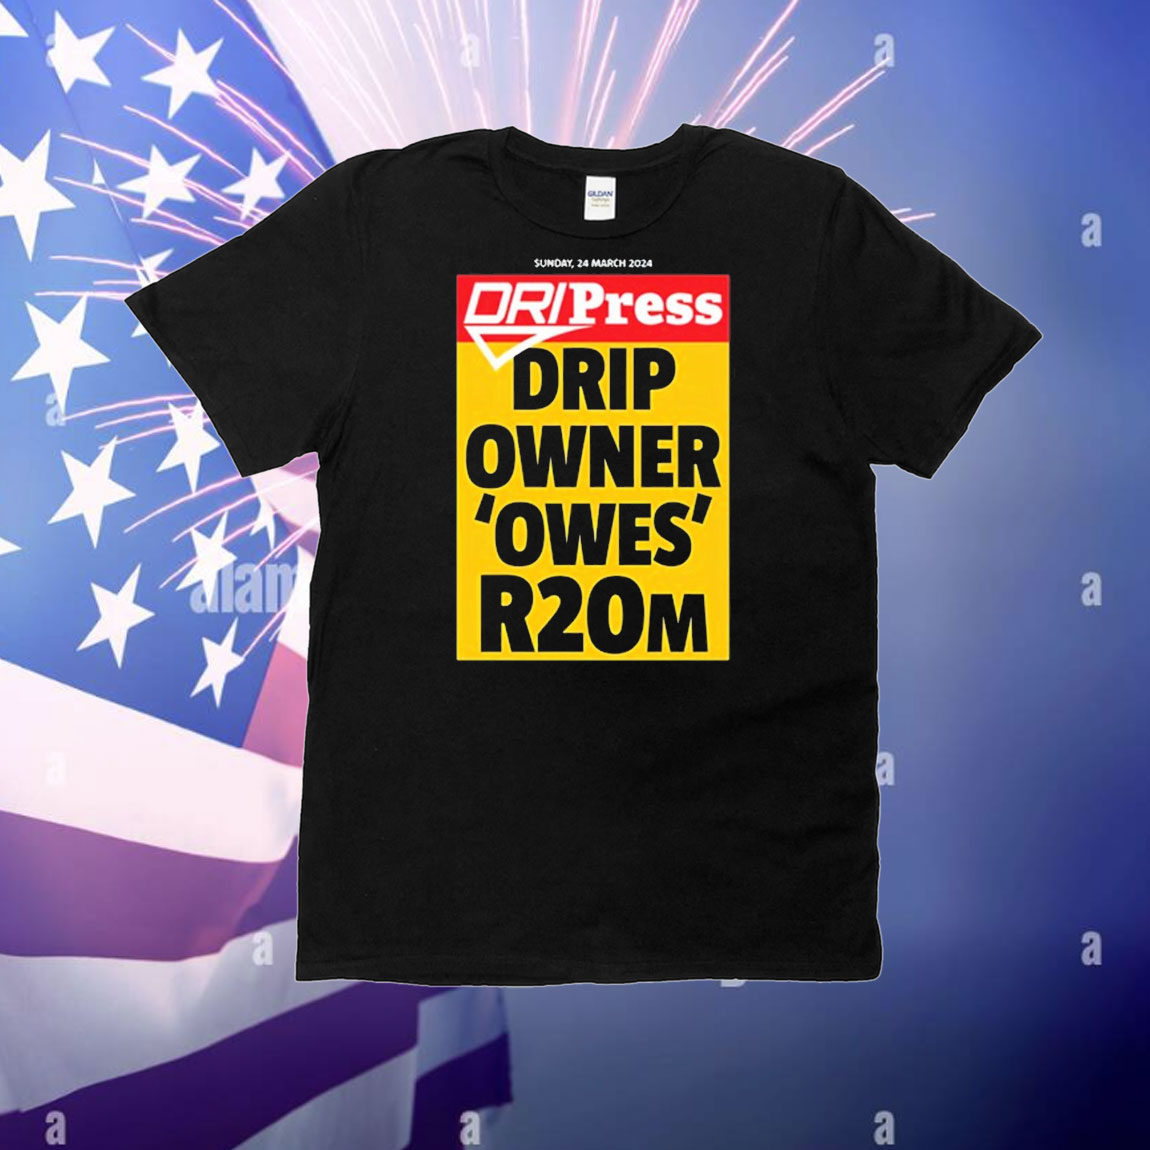 Dripress Drip Owner ‘Owes’ R20m t-shirt